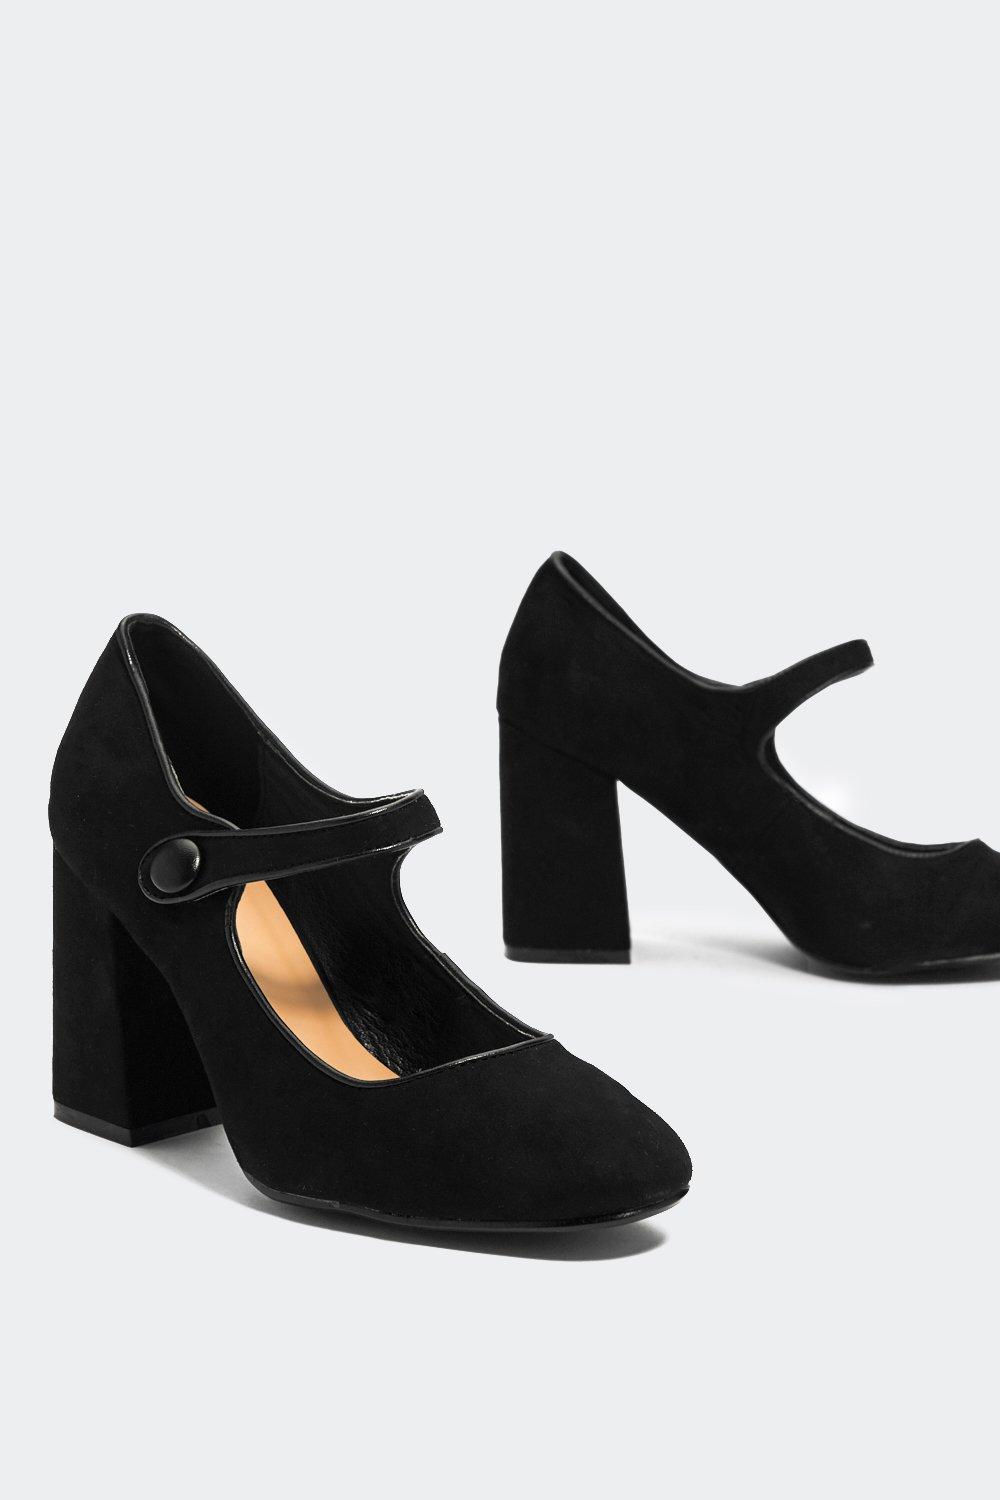 black mary jane shoes heels